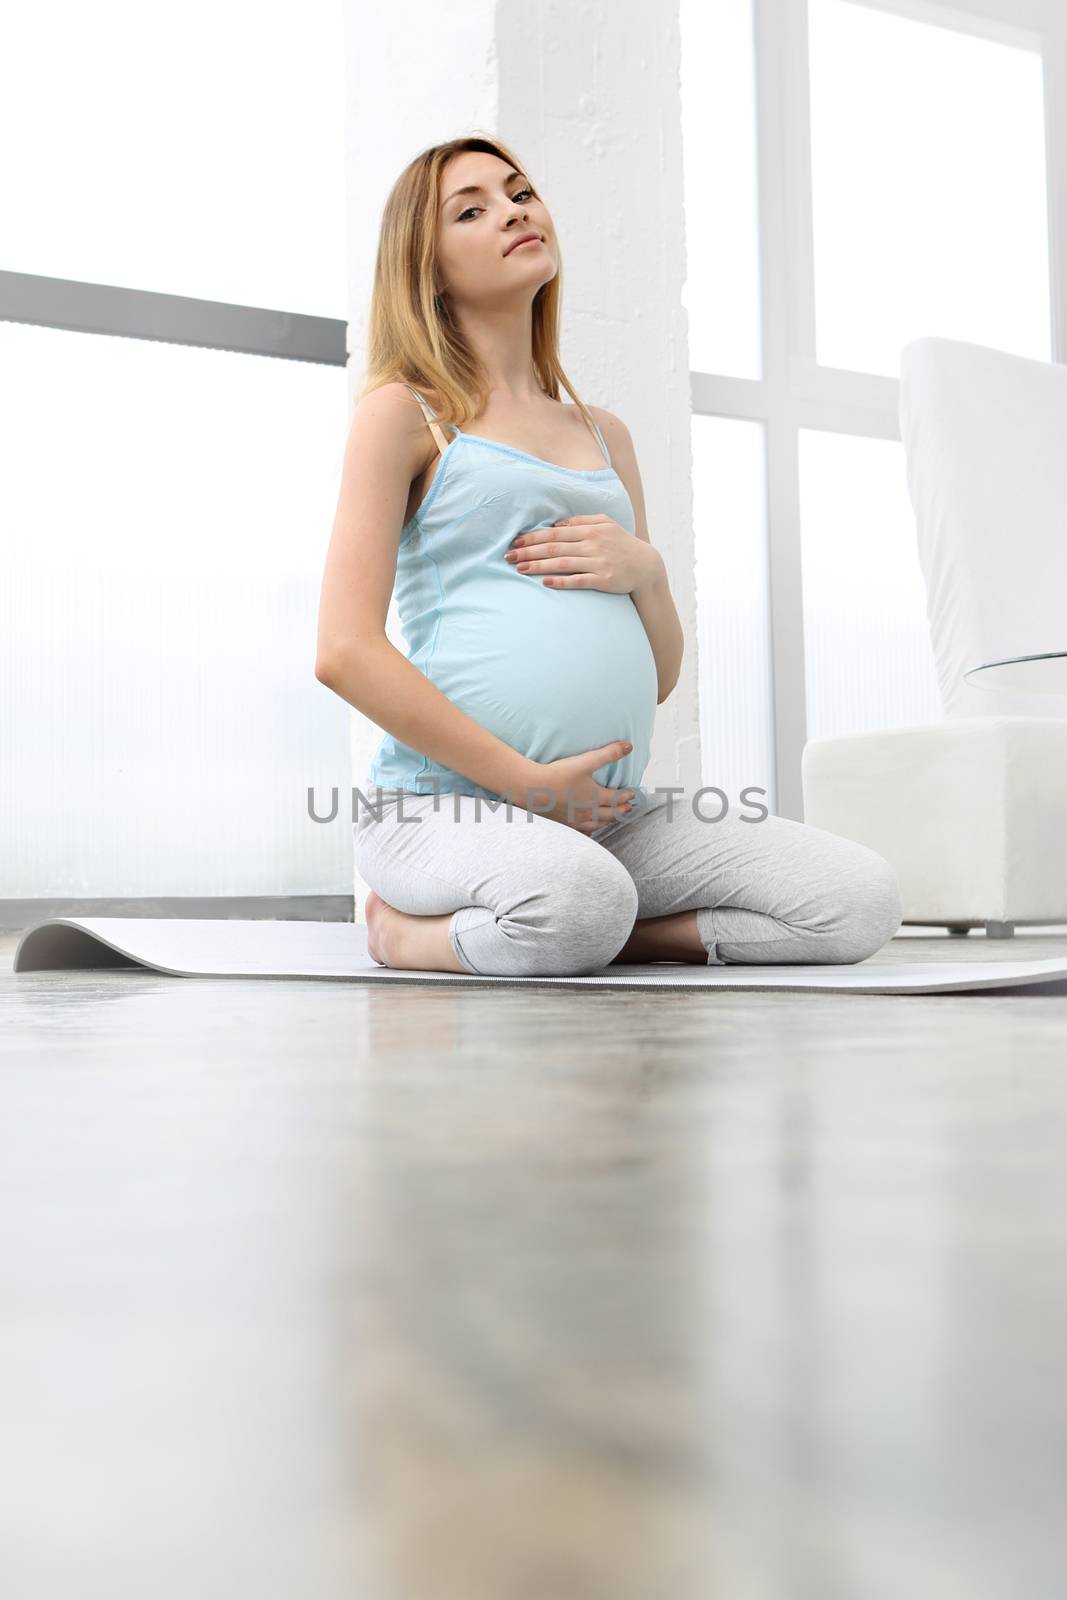 Pregnant woman doing yoga exercise by robert_przybysz